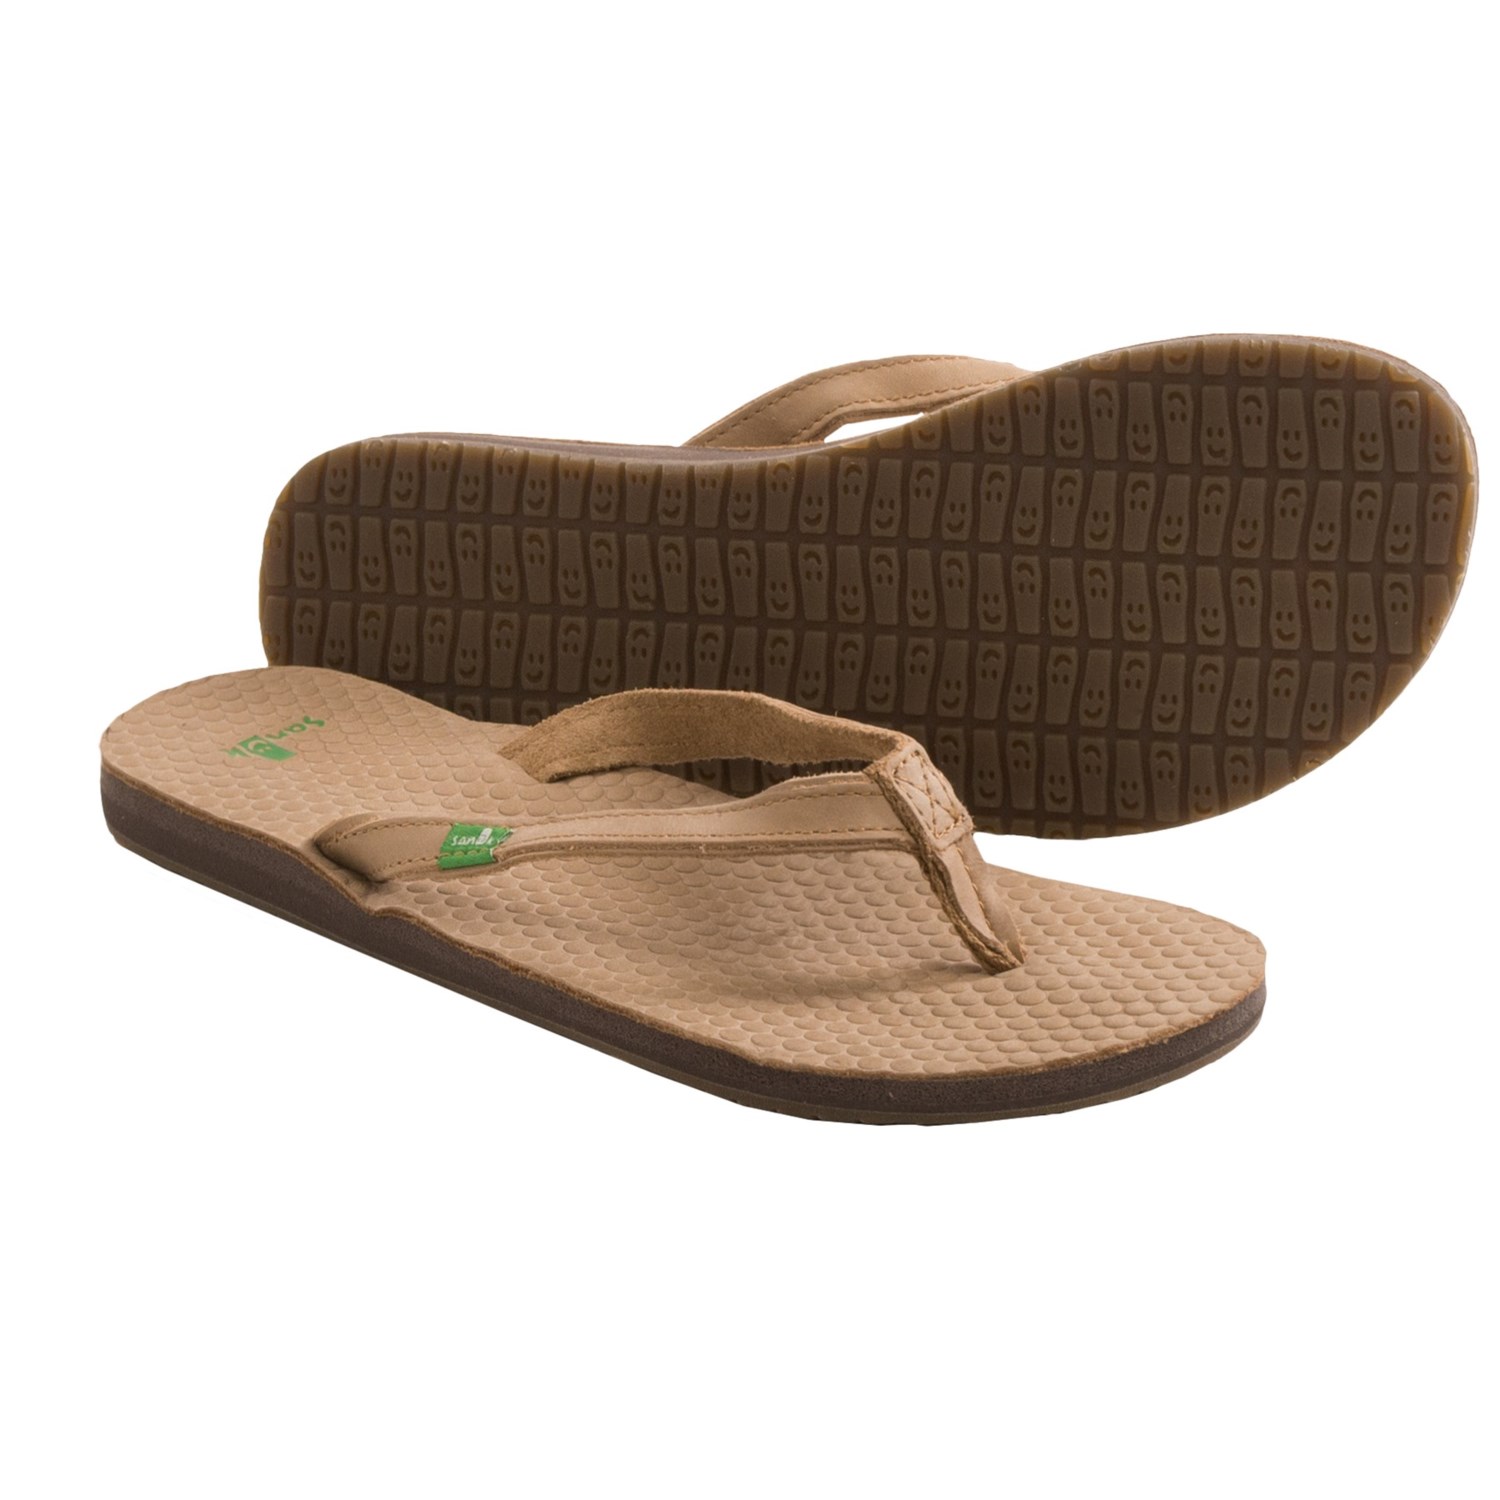 Sanuk Spritzer Sandals - Leather, Flip-Flops (For Women) - Save 30%